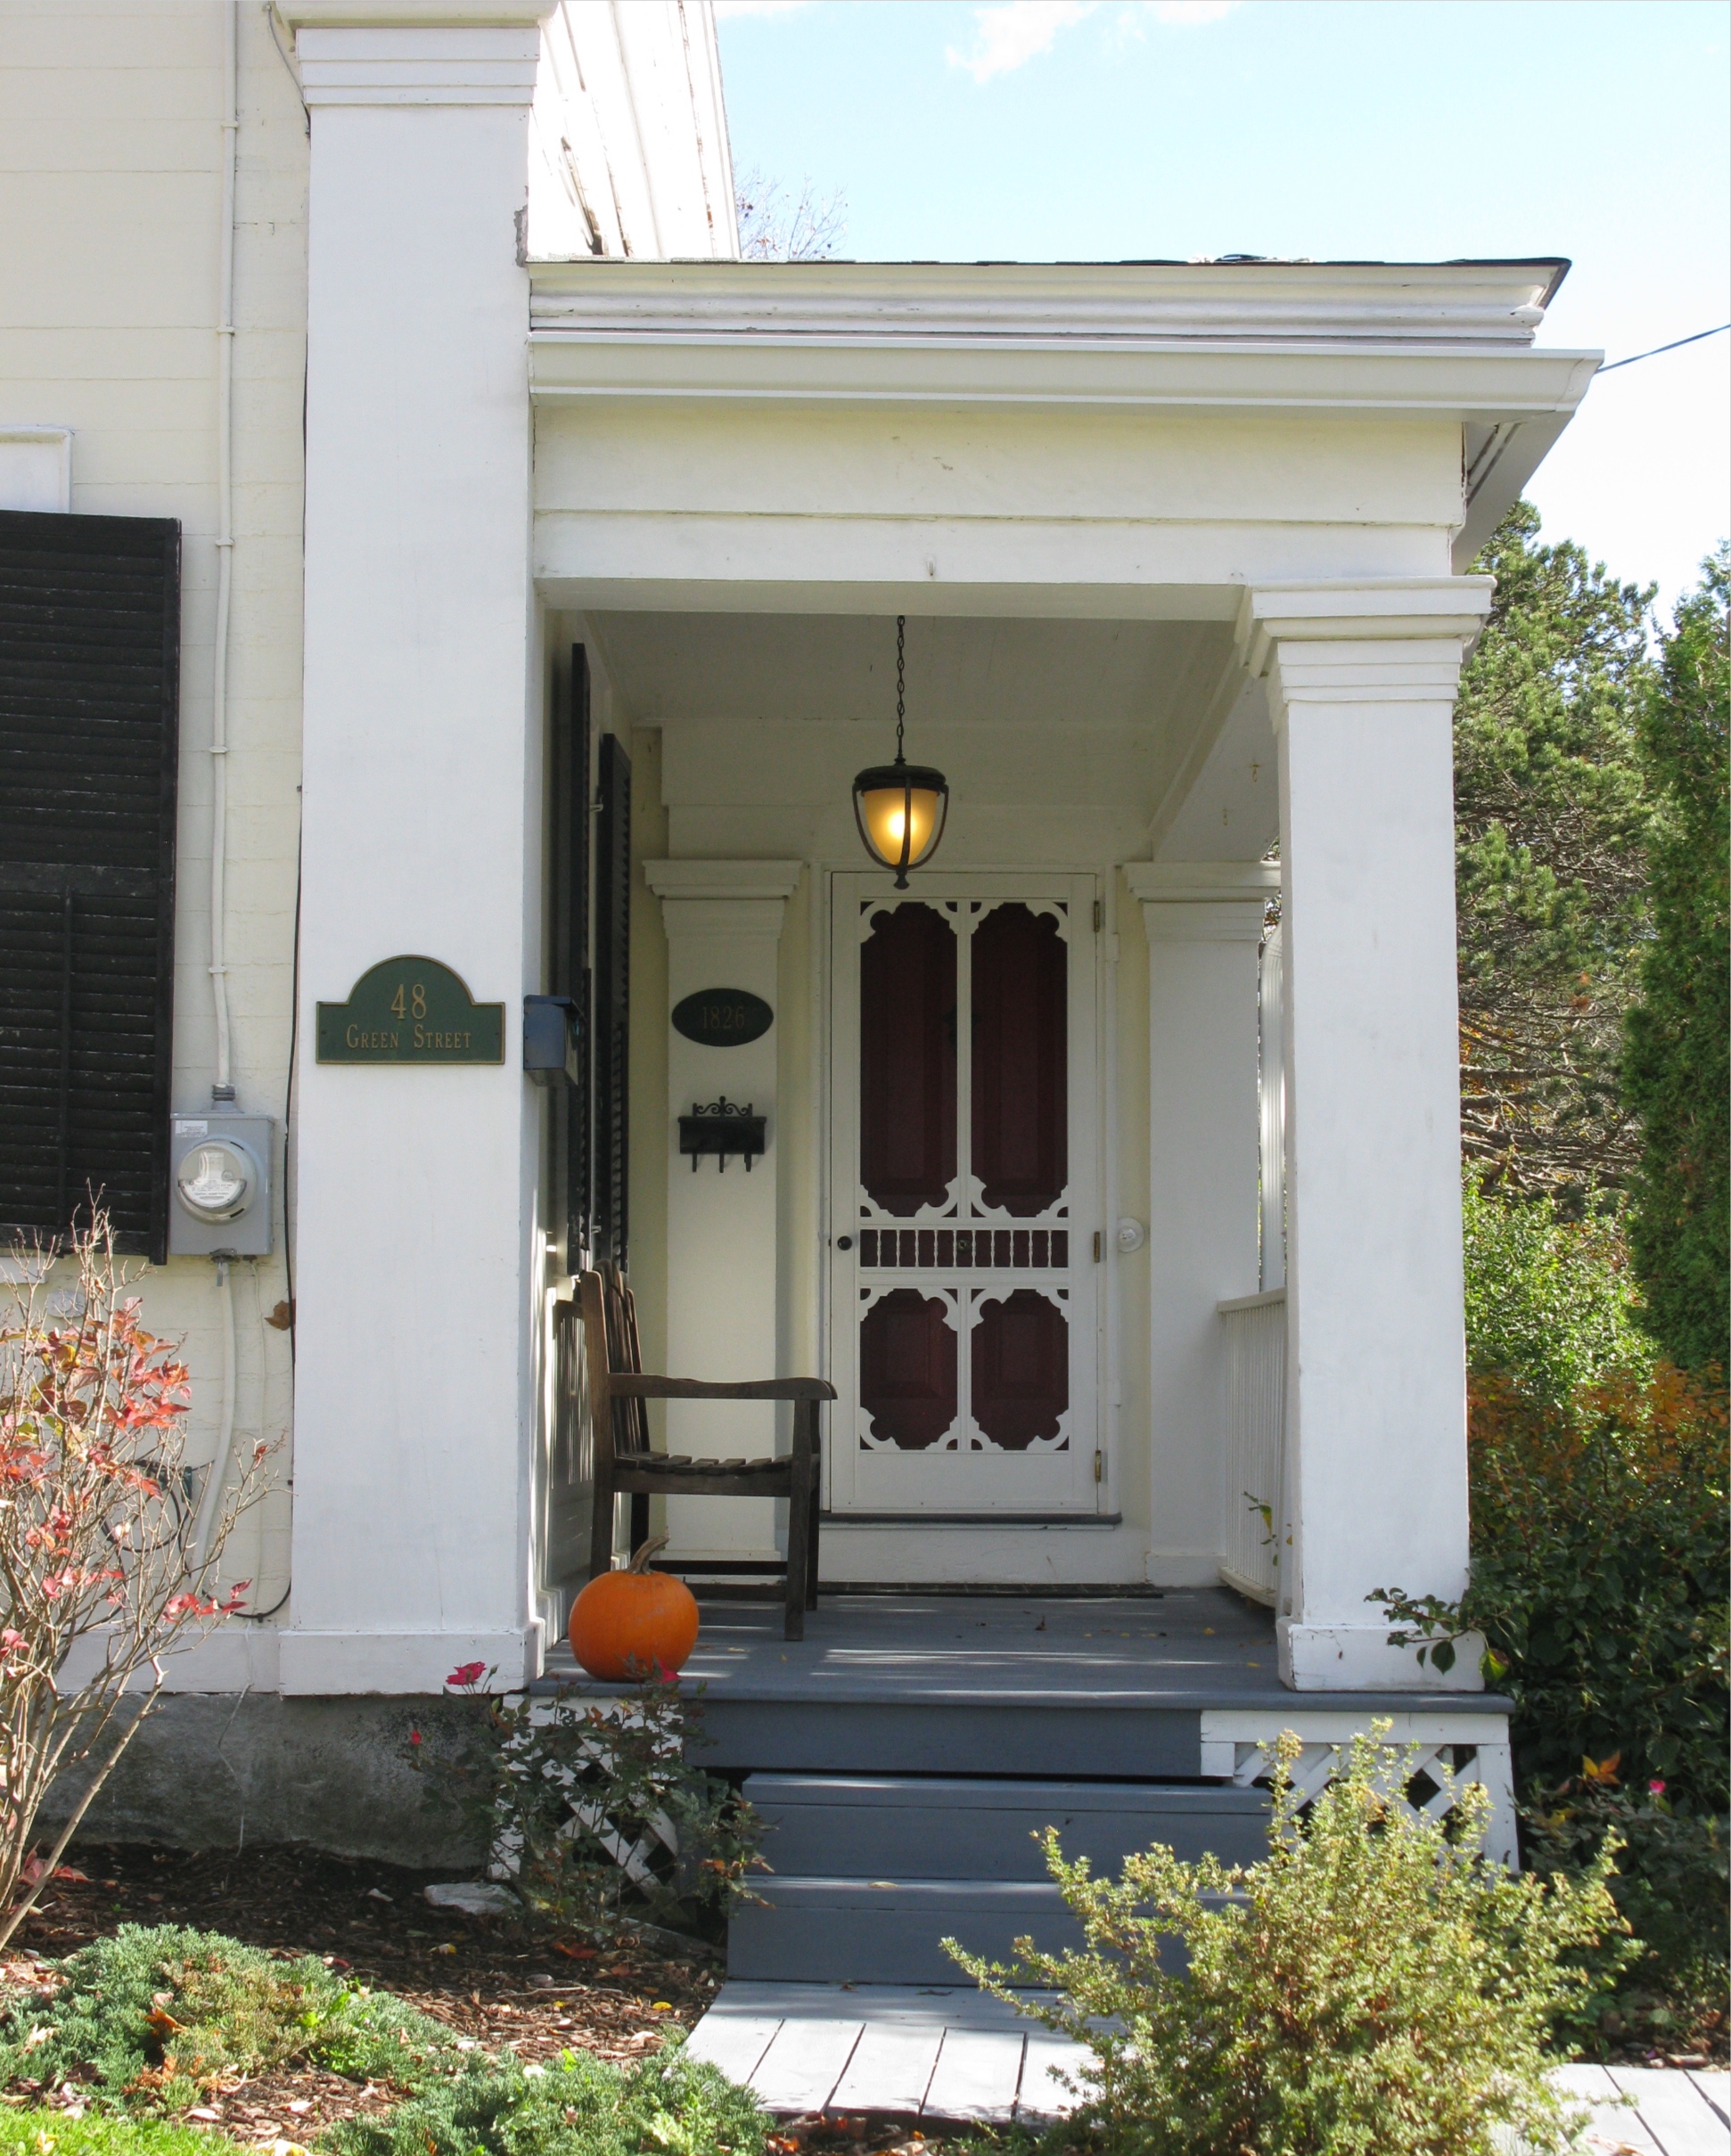 South porch entrance